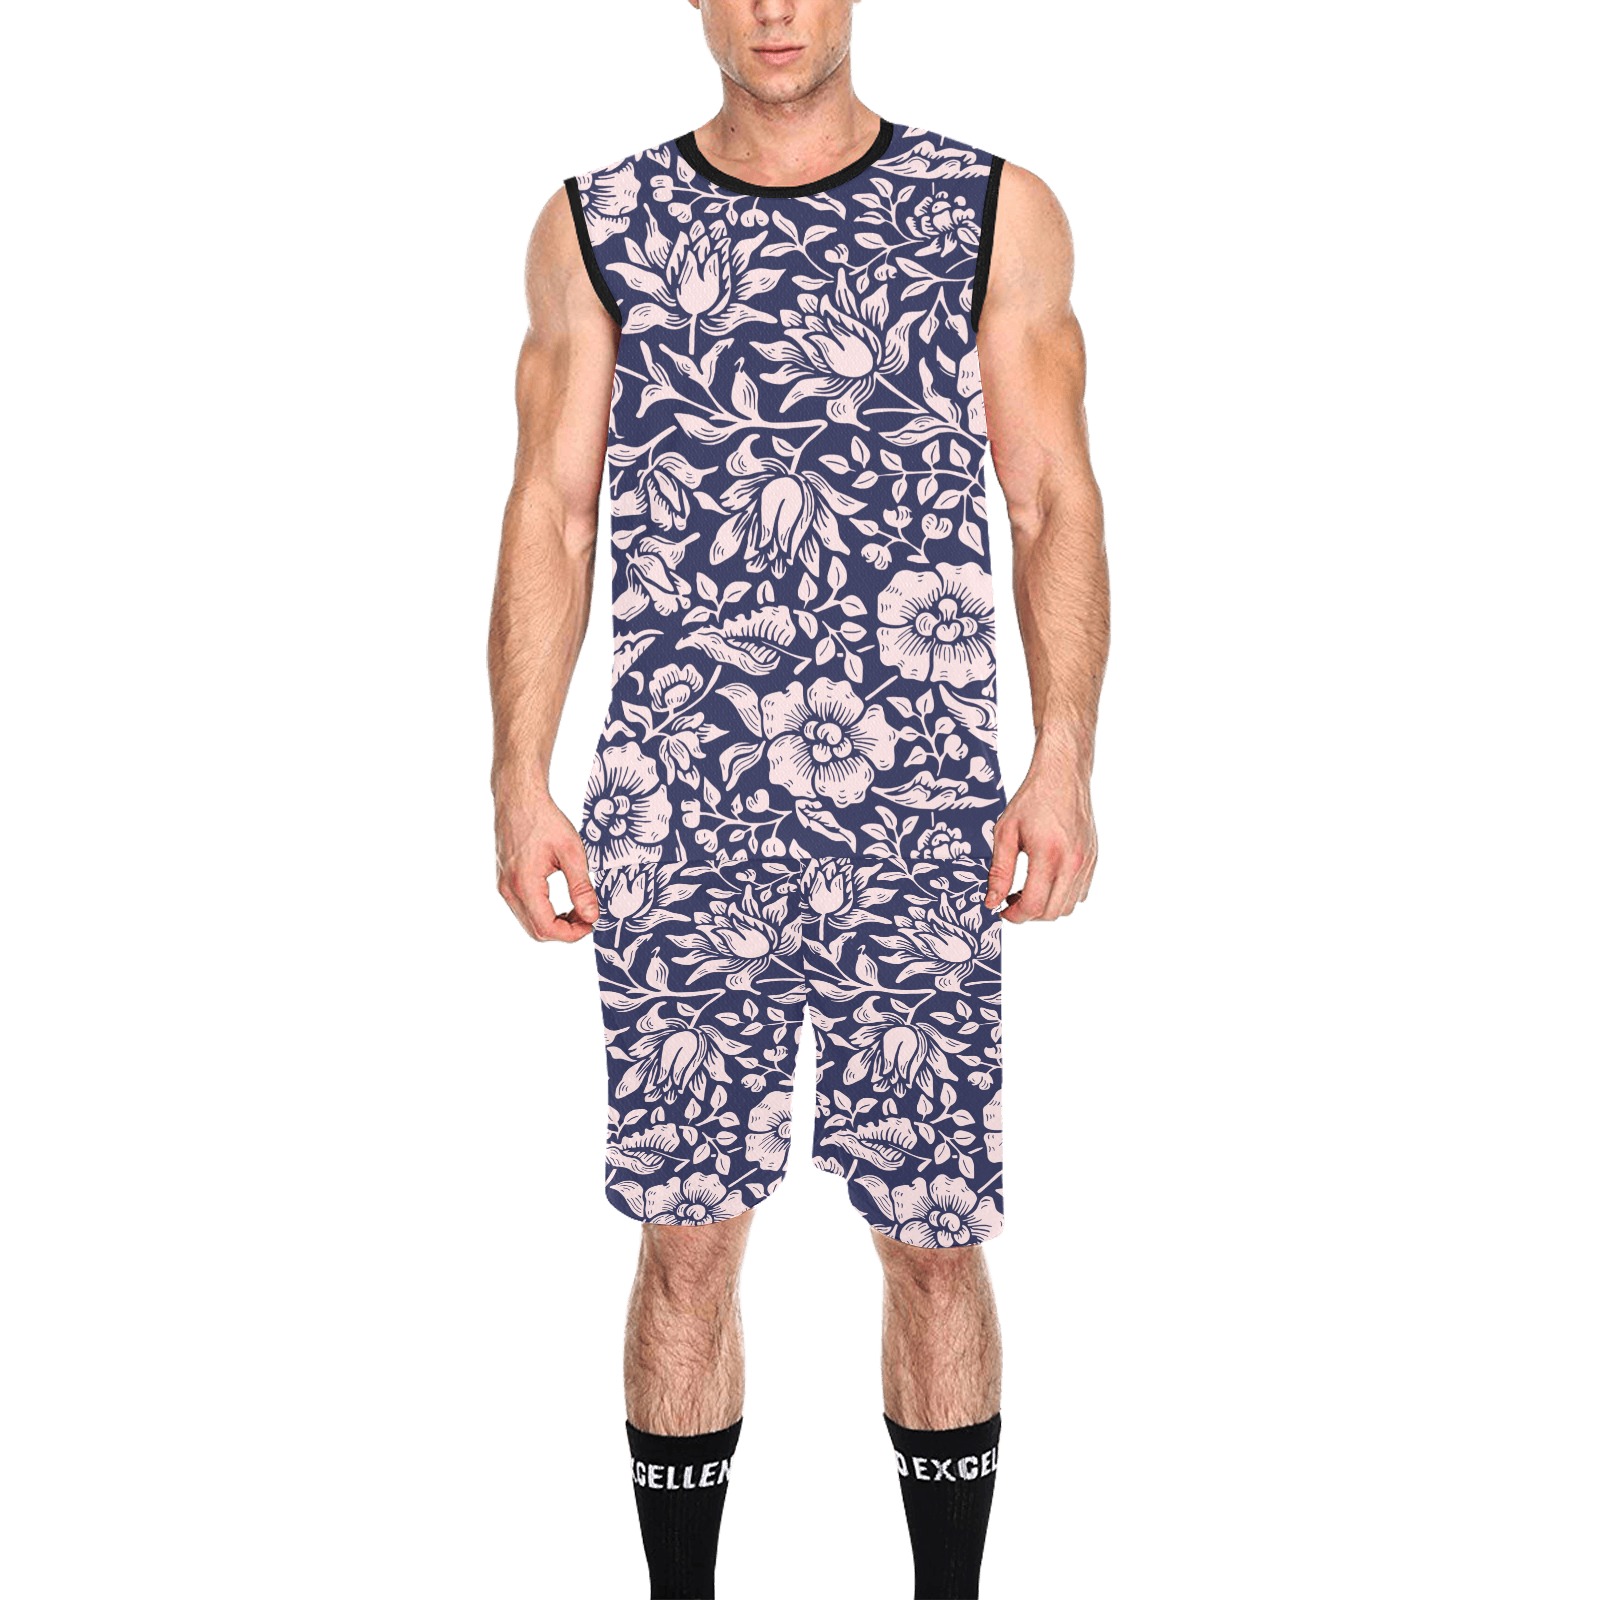 Uniform All Over Print Basketball Uniform